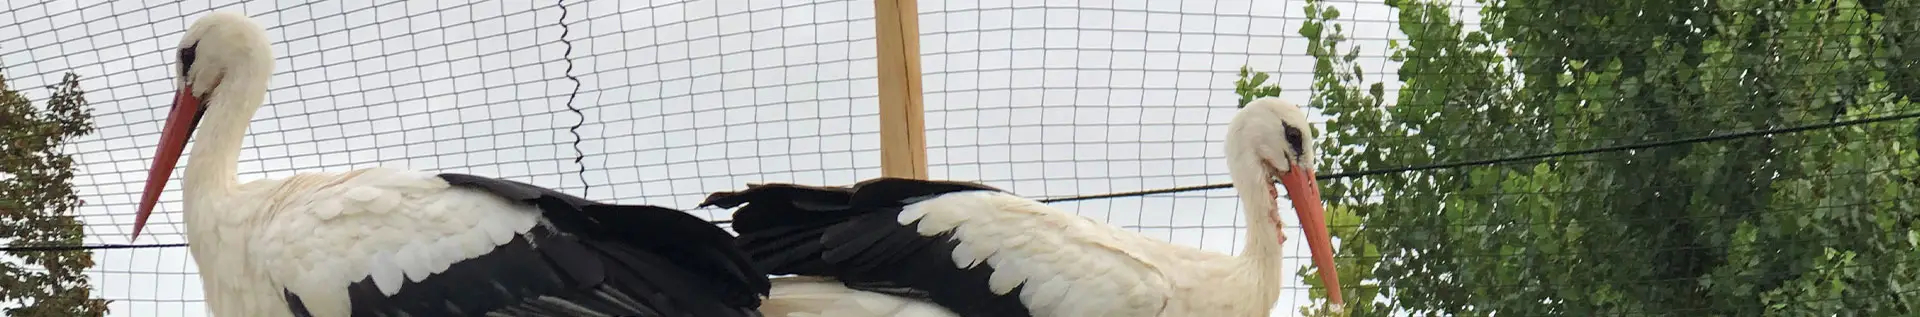 Pest Control, Anti-bird nets against seagulls and cormorants